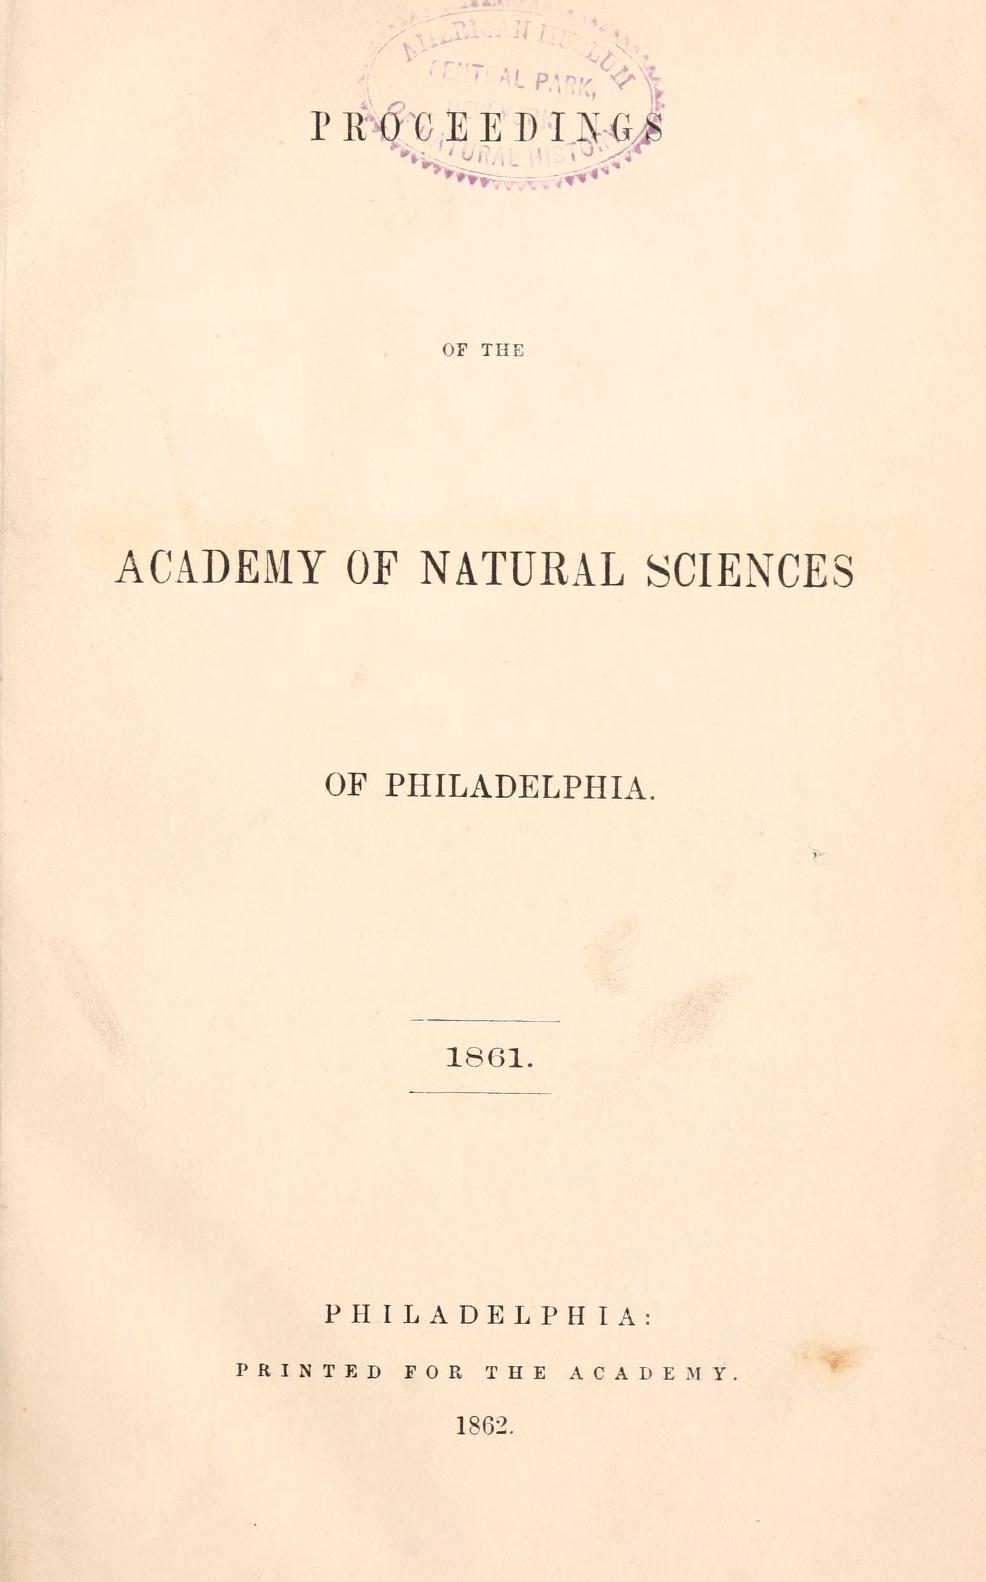 Media type: text; Ravenel 1861 Description: Proceedings of the Academy of Natural Sciences of Philadelphia, vol. XIII;